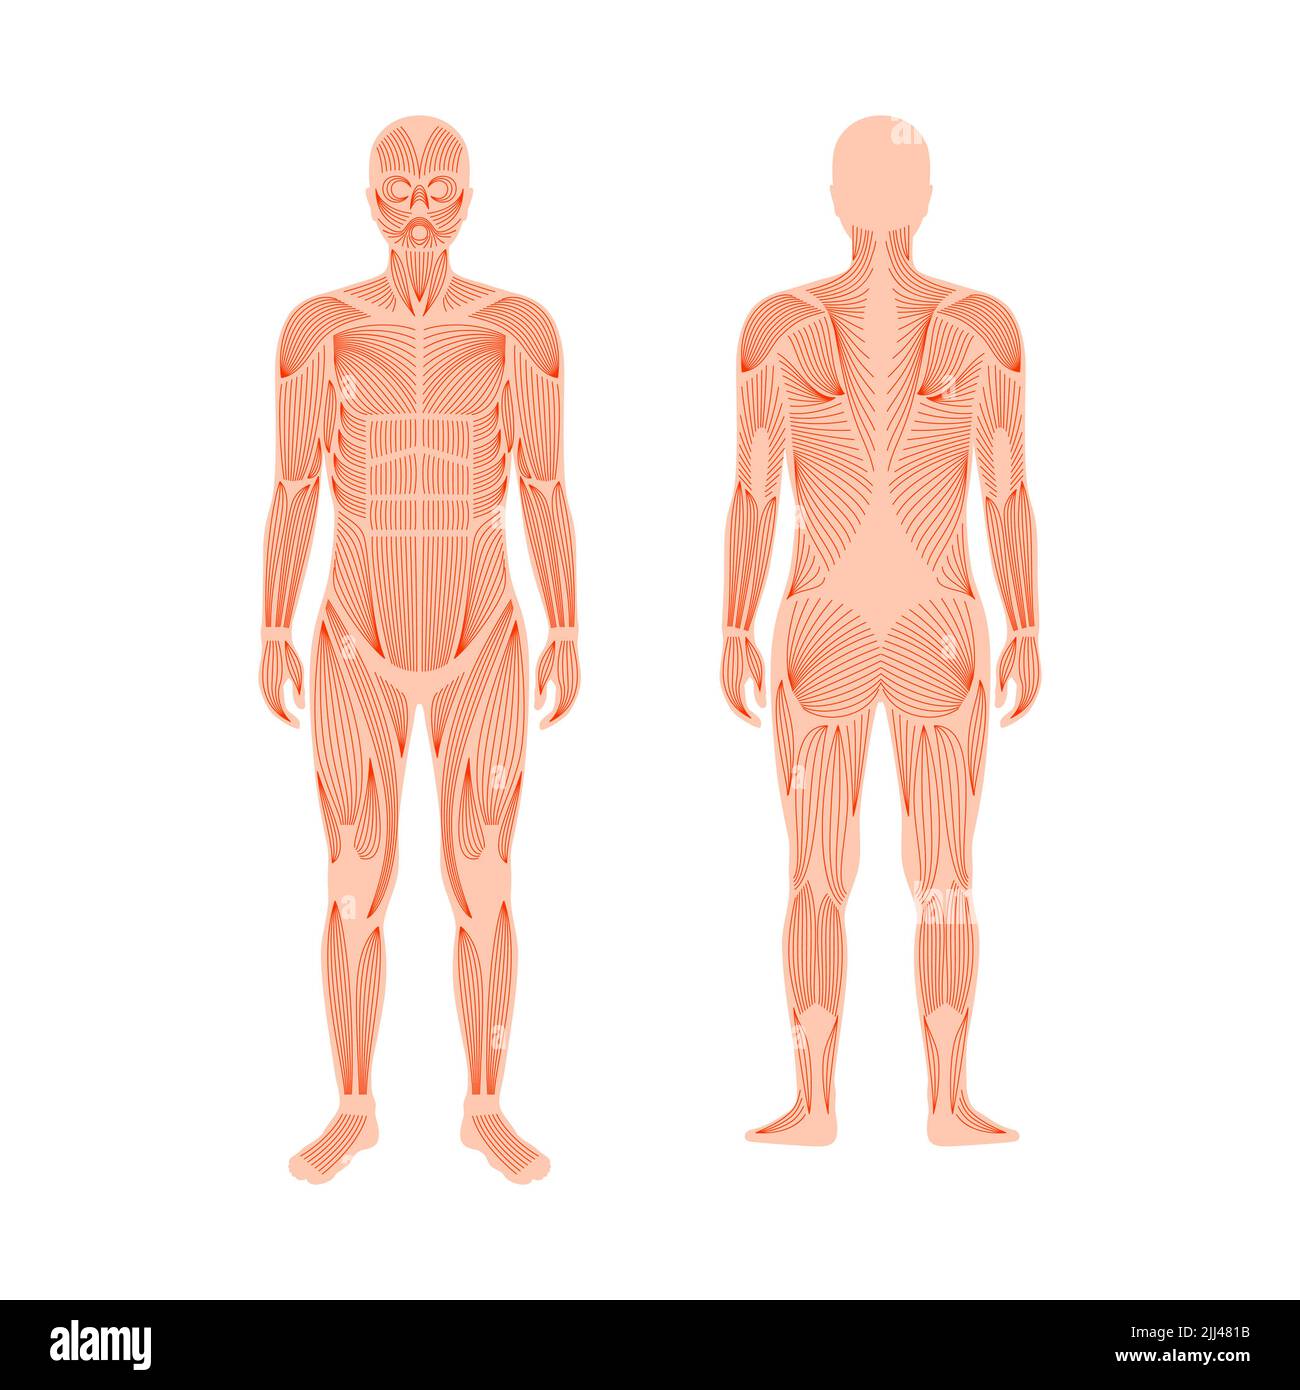 Male Muscular System Illustration Stock Photo Alamy